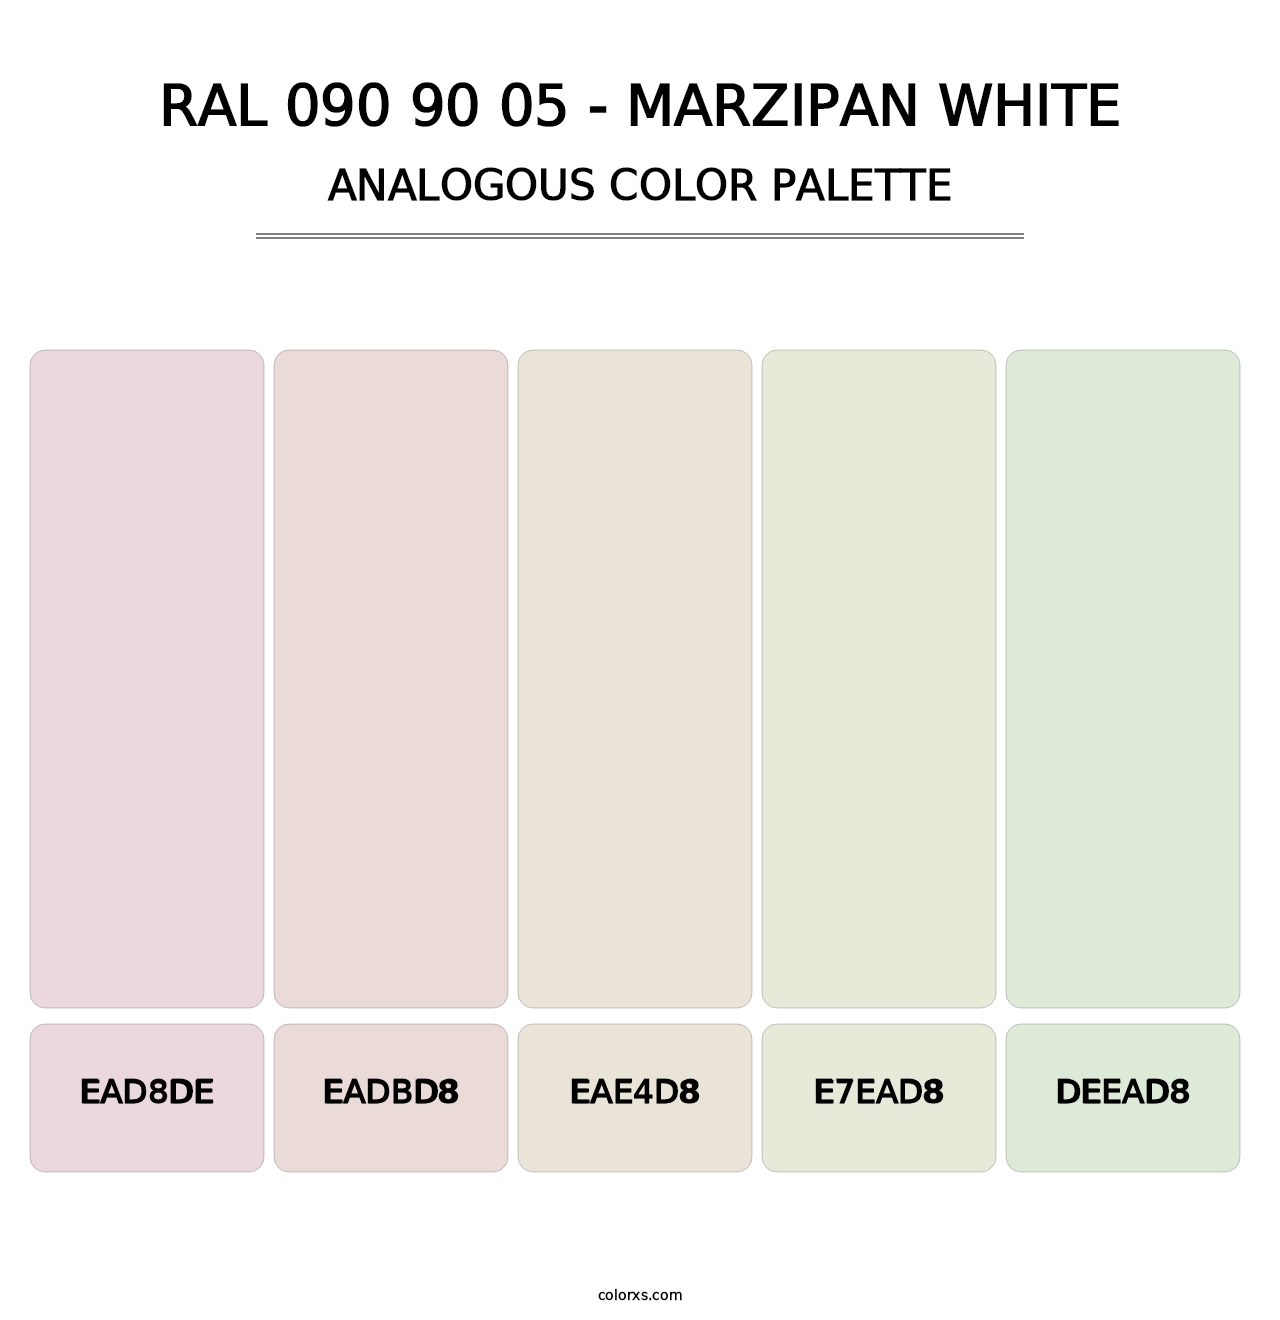 RAL 090 90 05 - Marzipan White - Analogous Color Palette